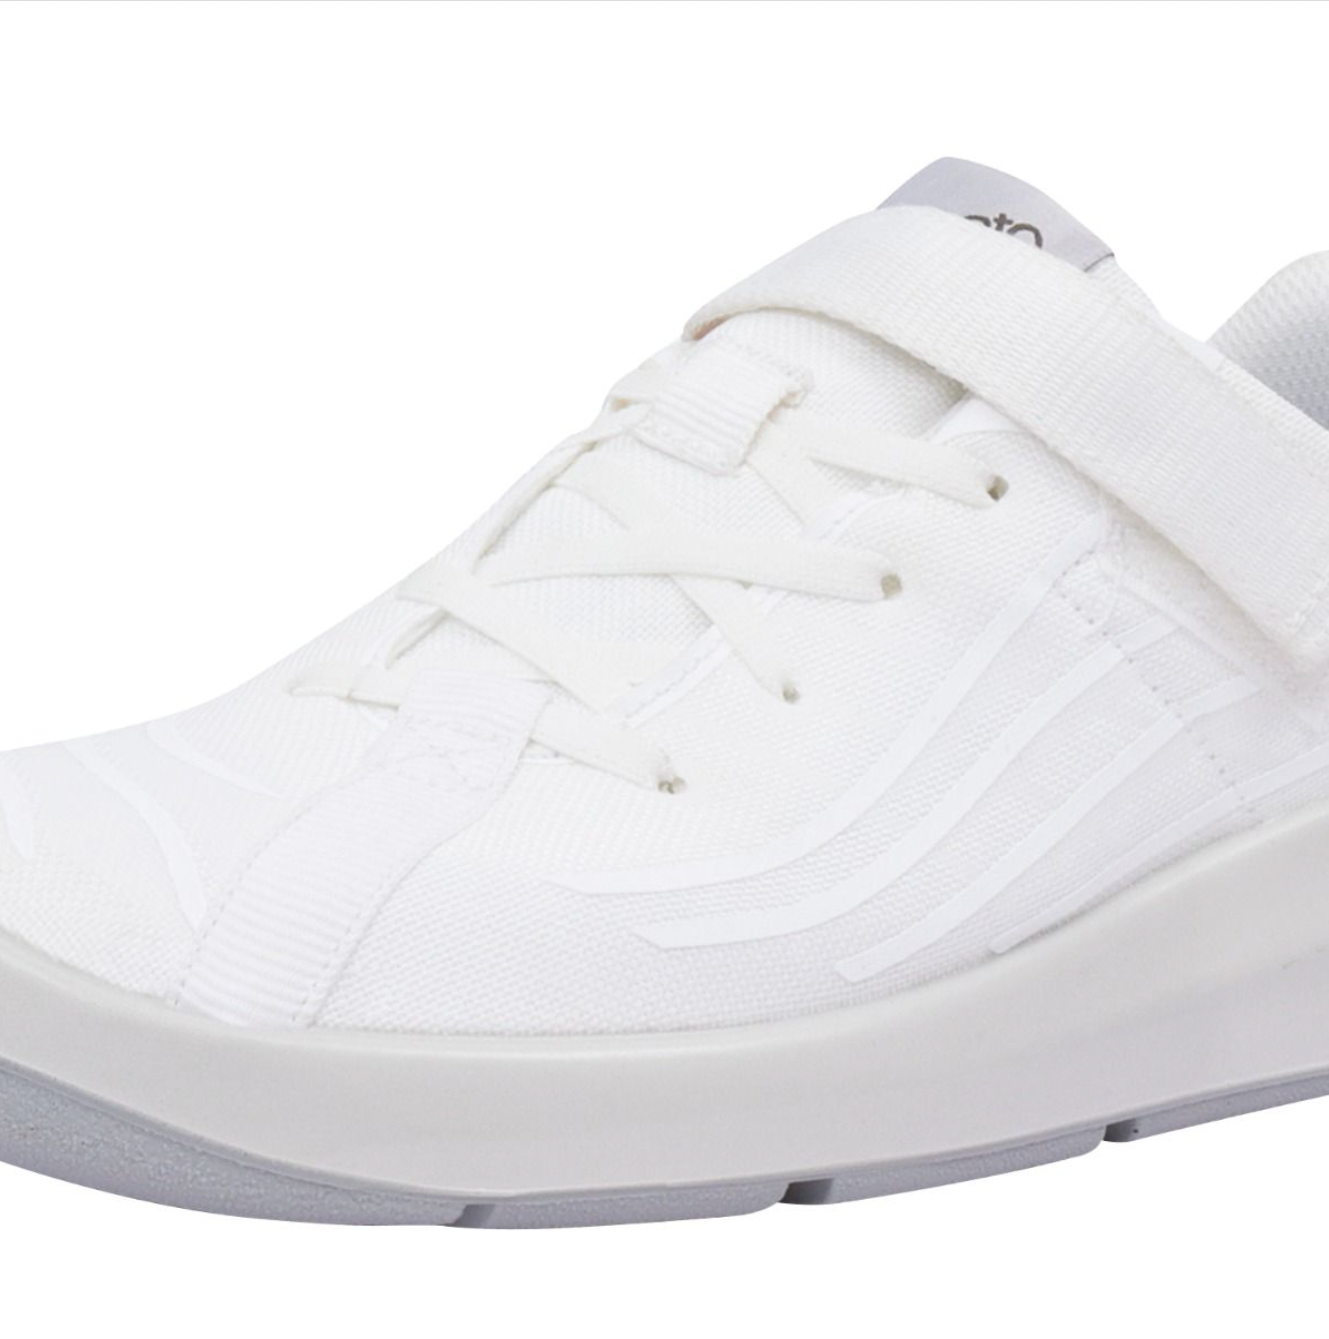 Plaeto Kid - Nova Unisex School Shoes (Velcro) - UK 1 To UK 4 - EU 33 To EU 36.5 - White